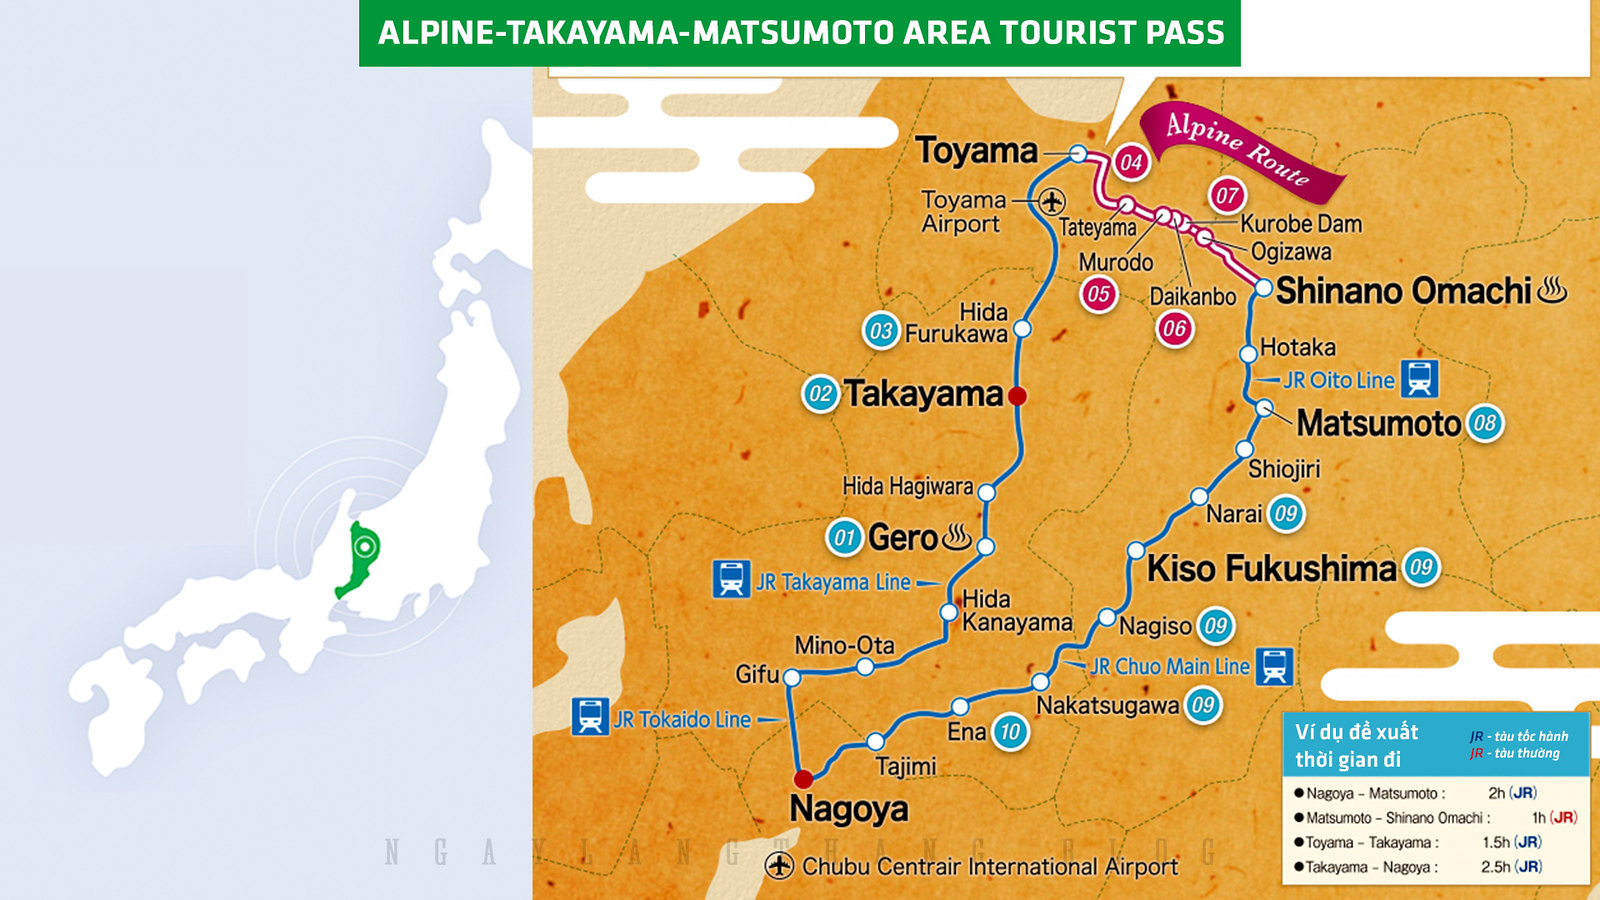 Alpine-Takayama-Matsumoto Area Tourist Pass-ngaylangthang